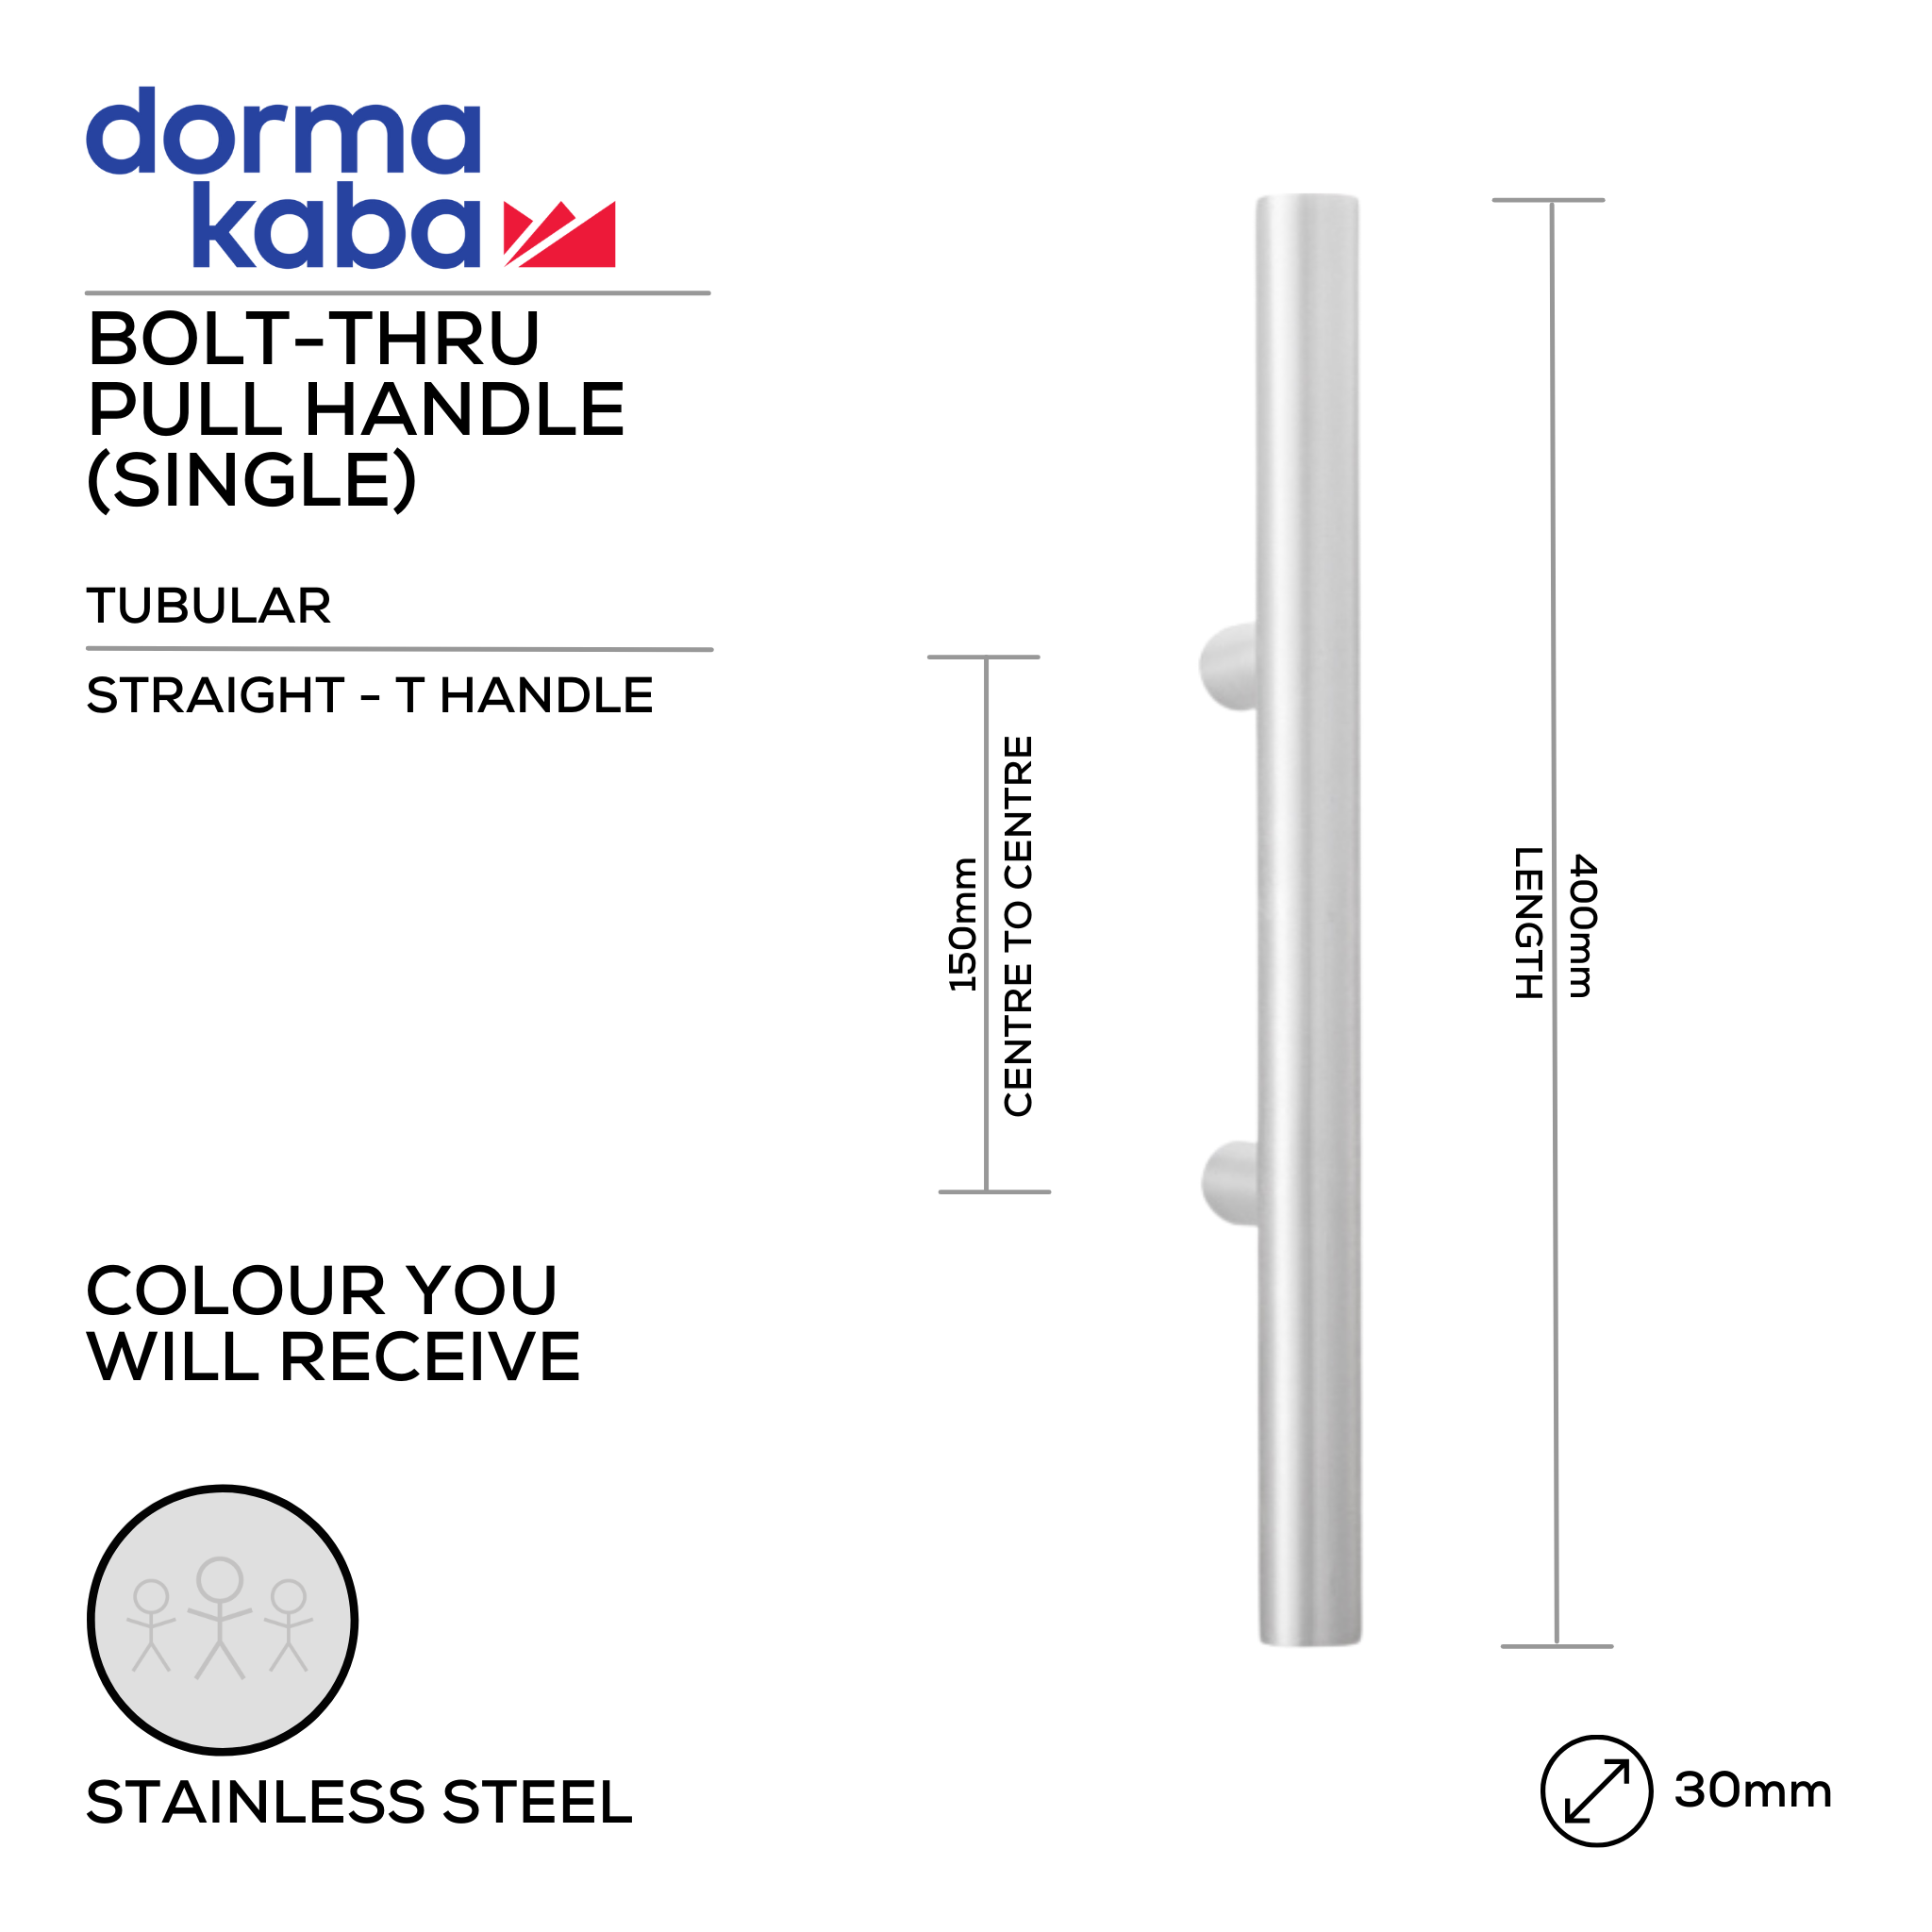 DPH 205 BT, Pull Handle, Tubular, Straight, T Handle, BoltThru, 30mm (Ø) x 400mm (l) x 150mm (ctc), Stainless Steel, DORMAKABA